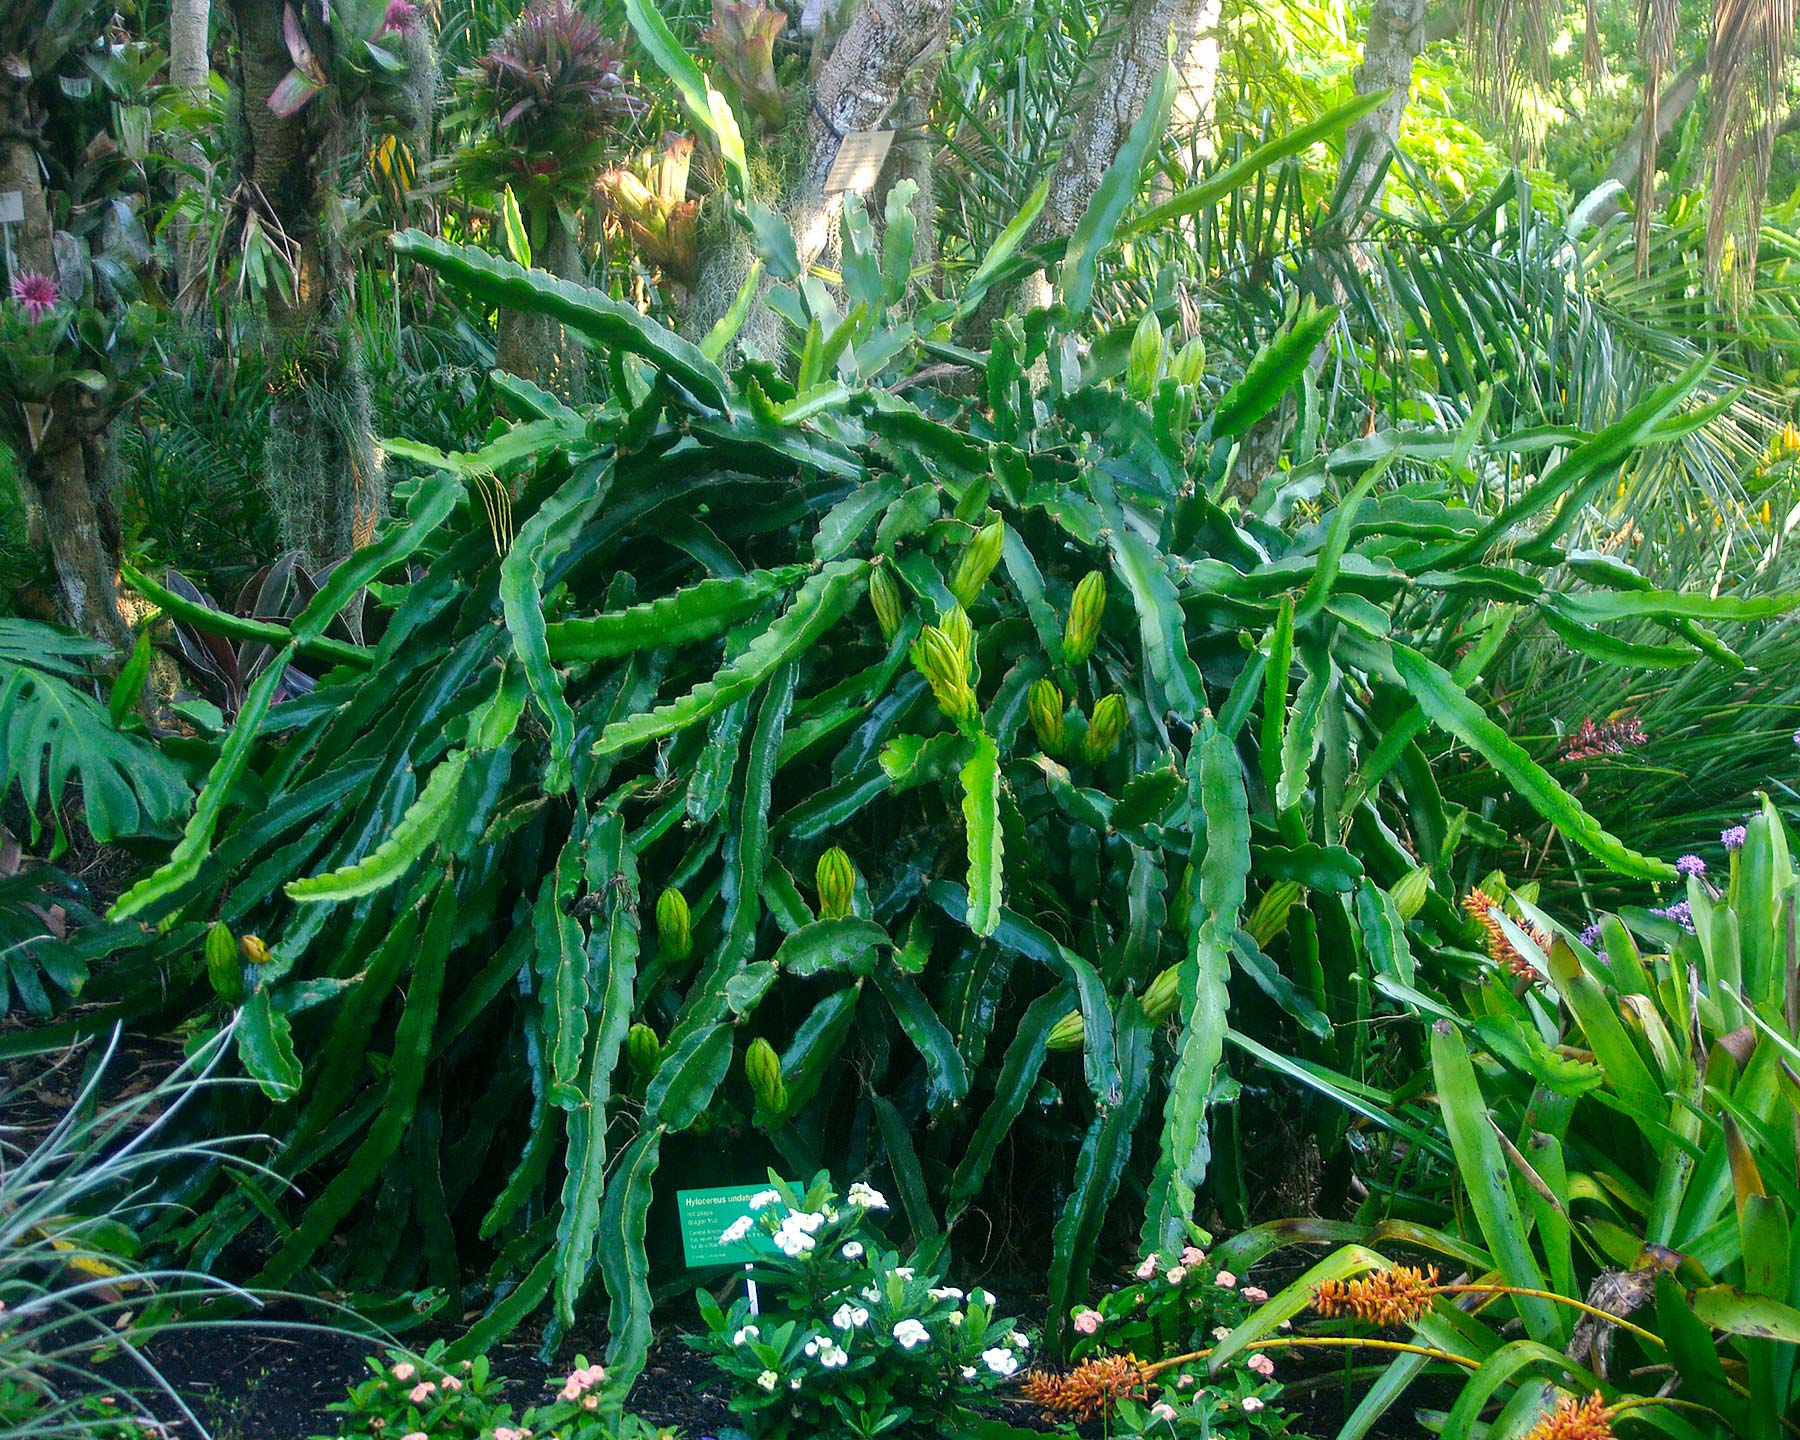 Hylocerus undatus - Dragonfruit plant - large spreading succulent